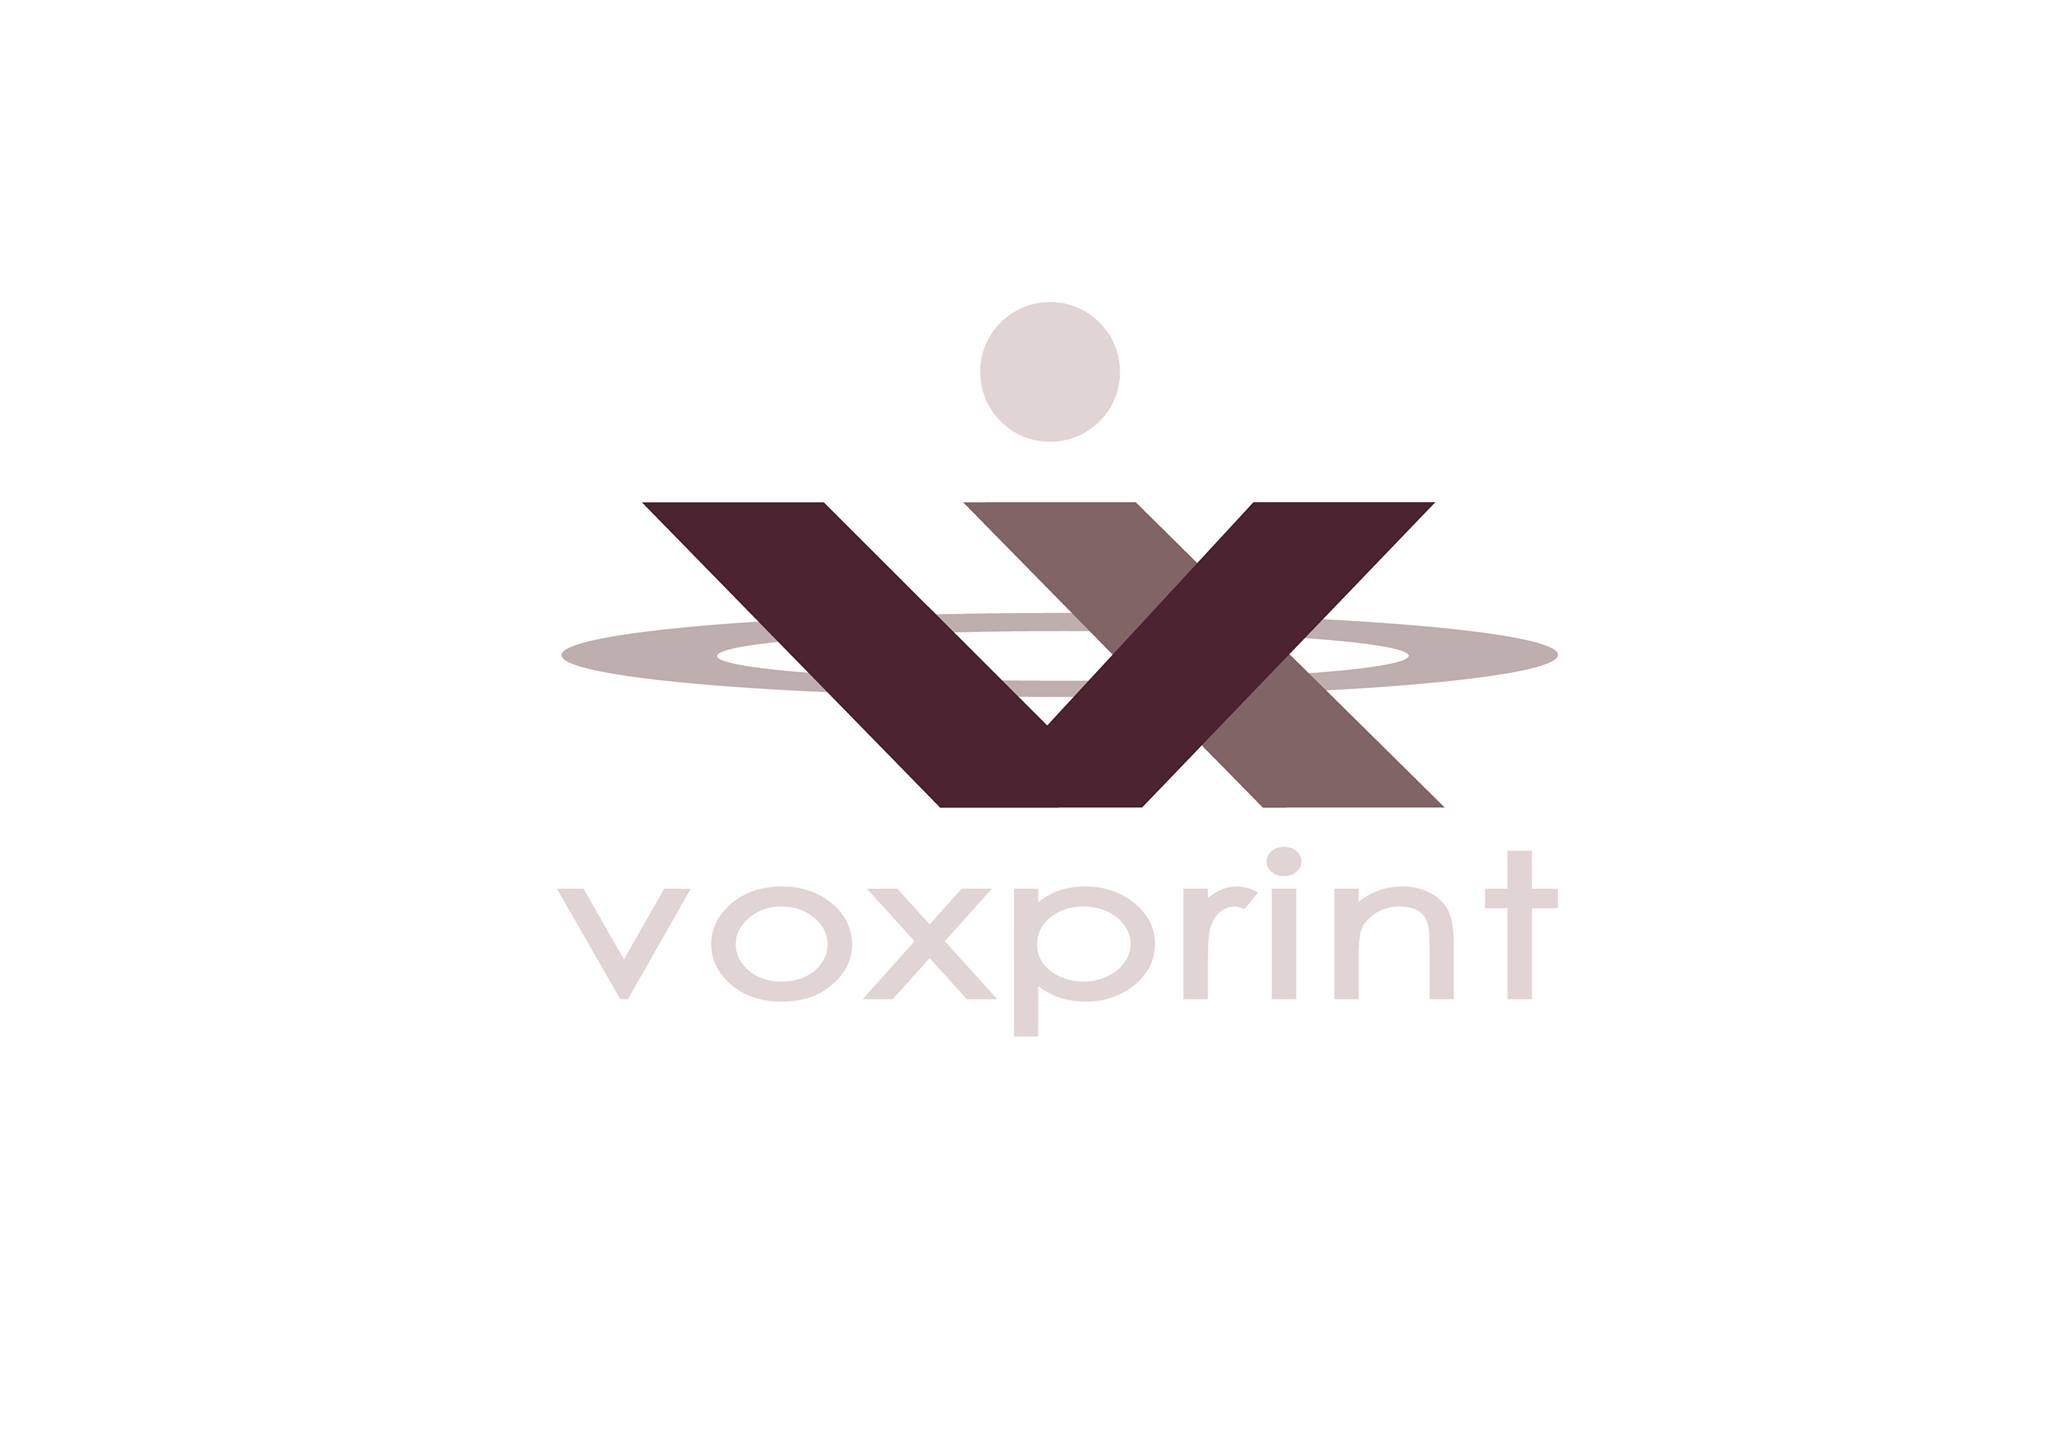 Voxprint